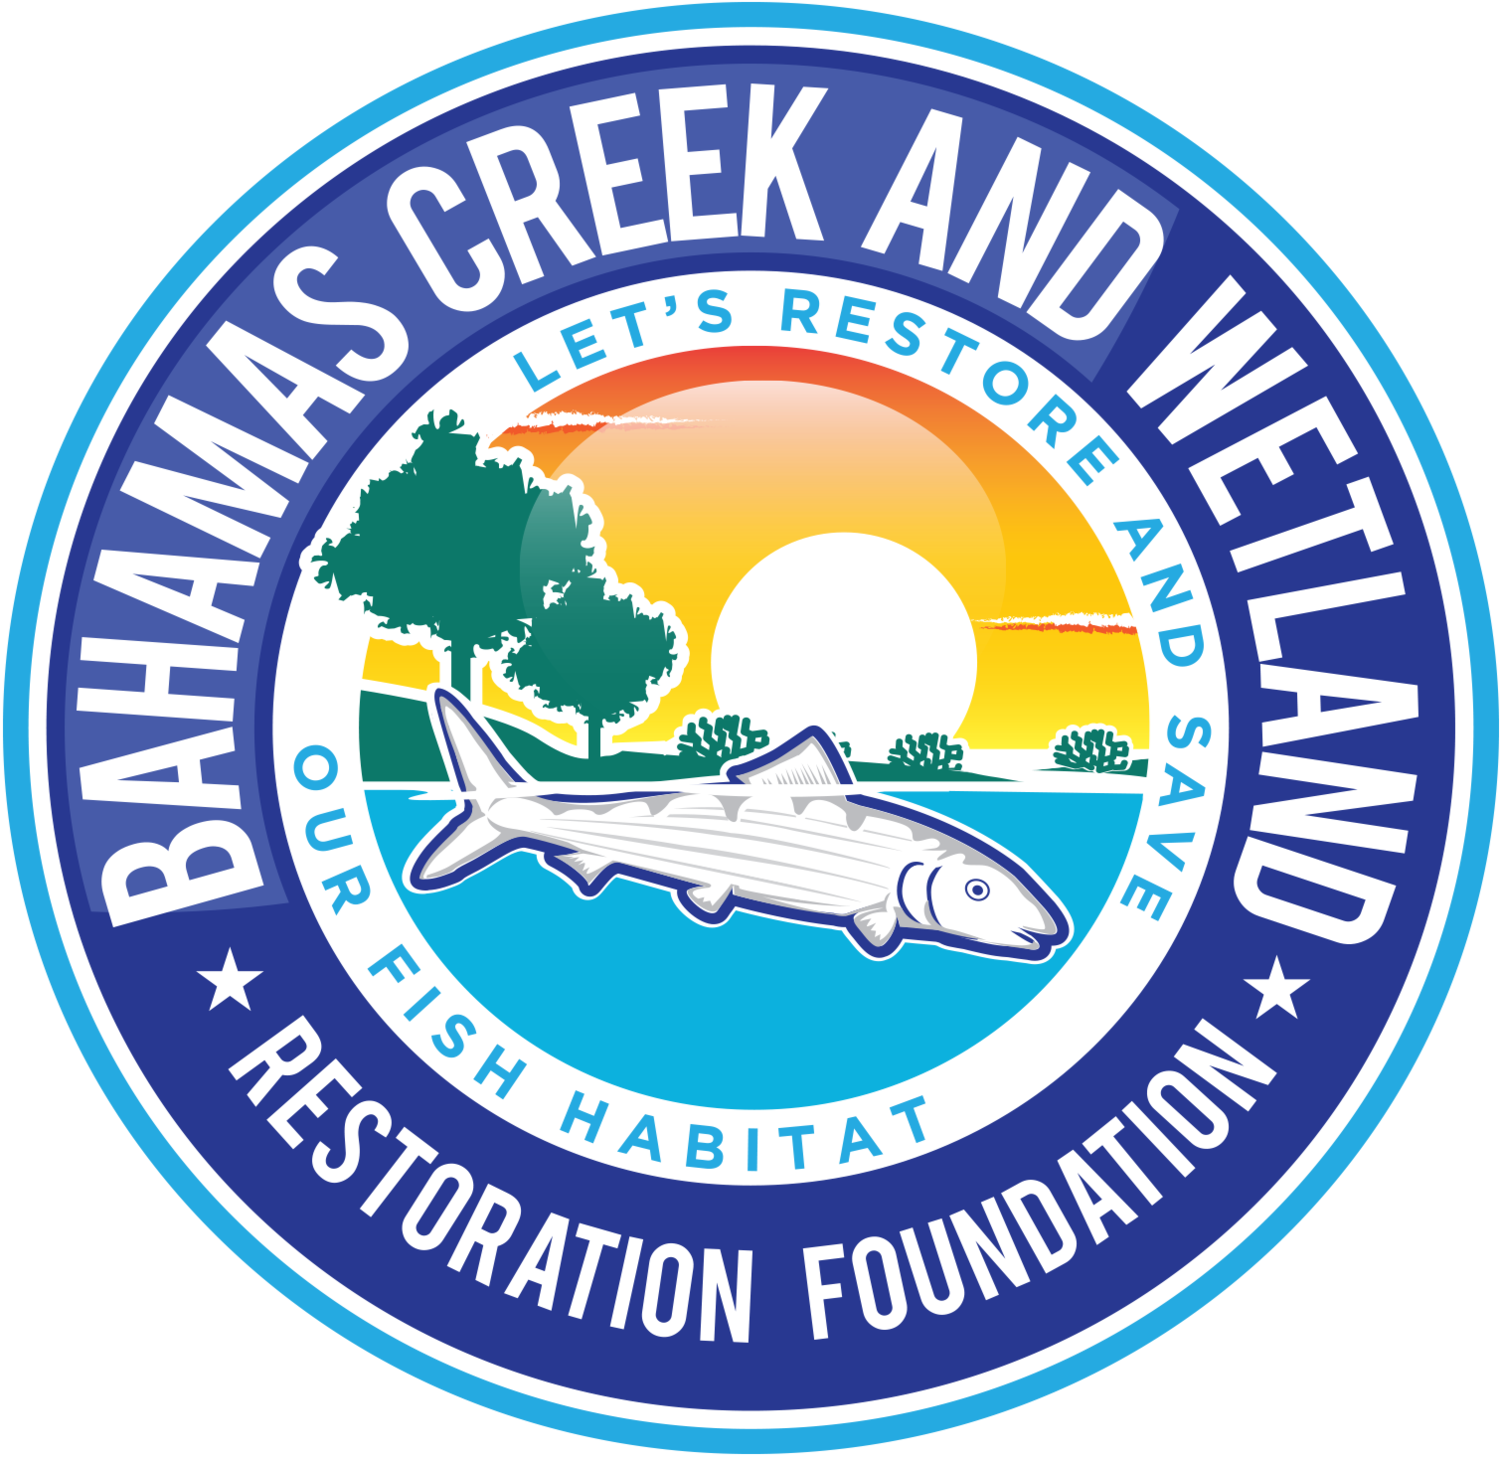 Bahamas Creek & Wetland Restoration Foundation